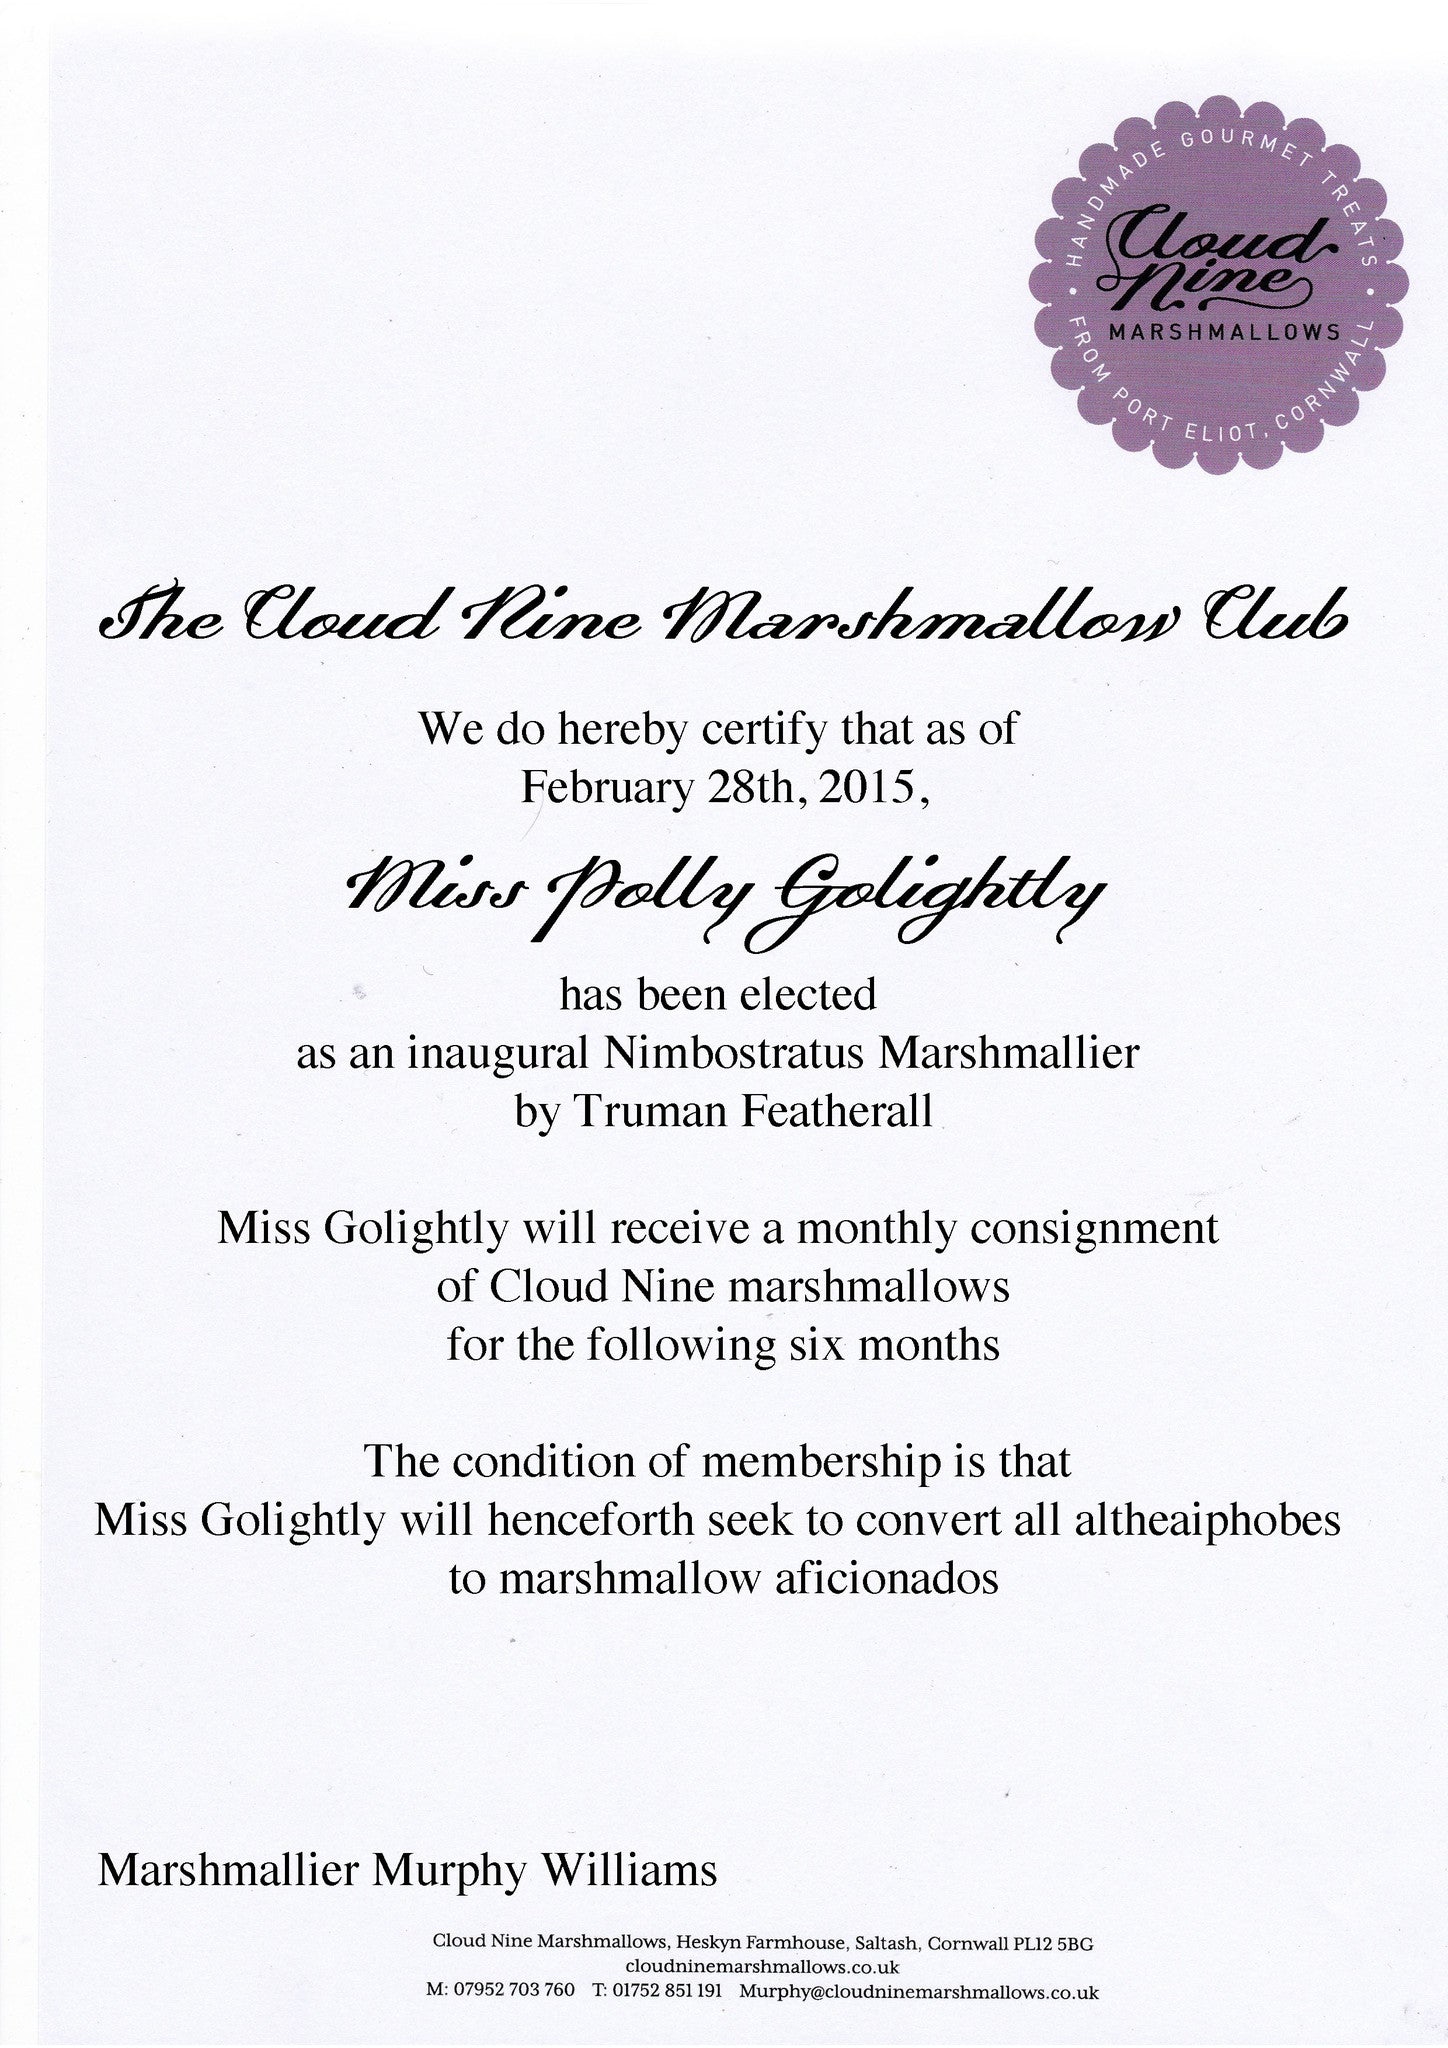 The Cloud Nine Marshmallow Club